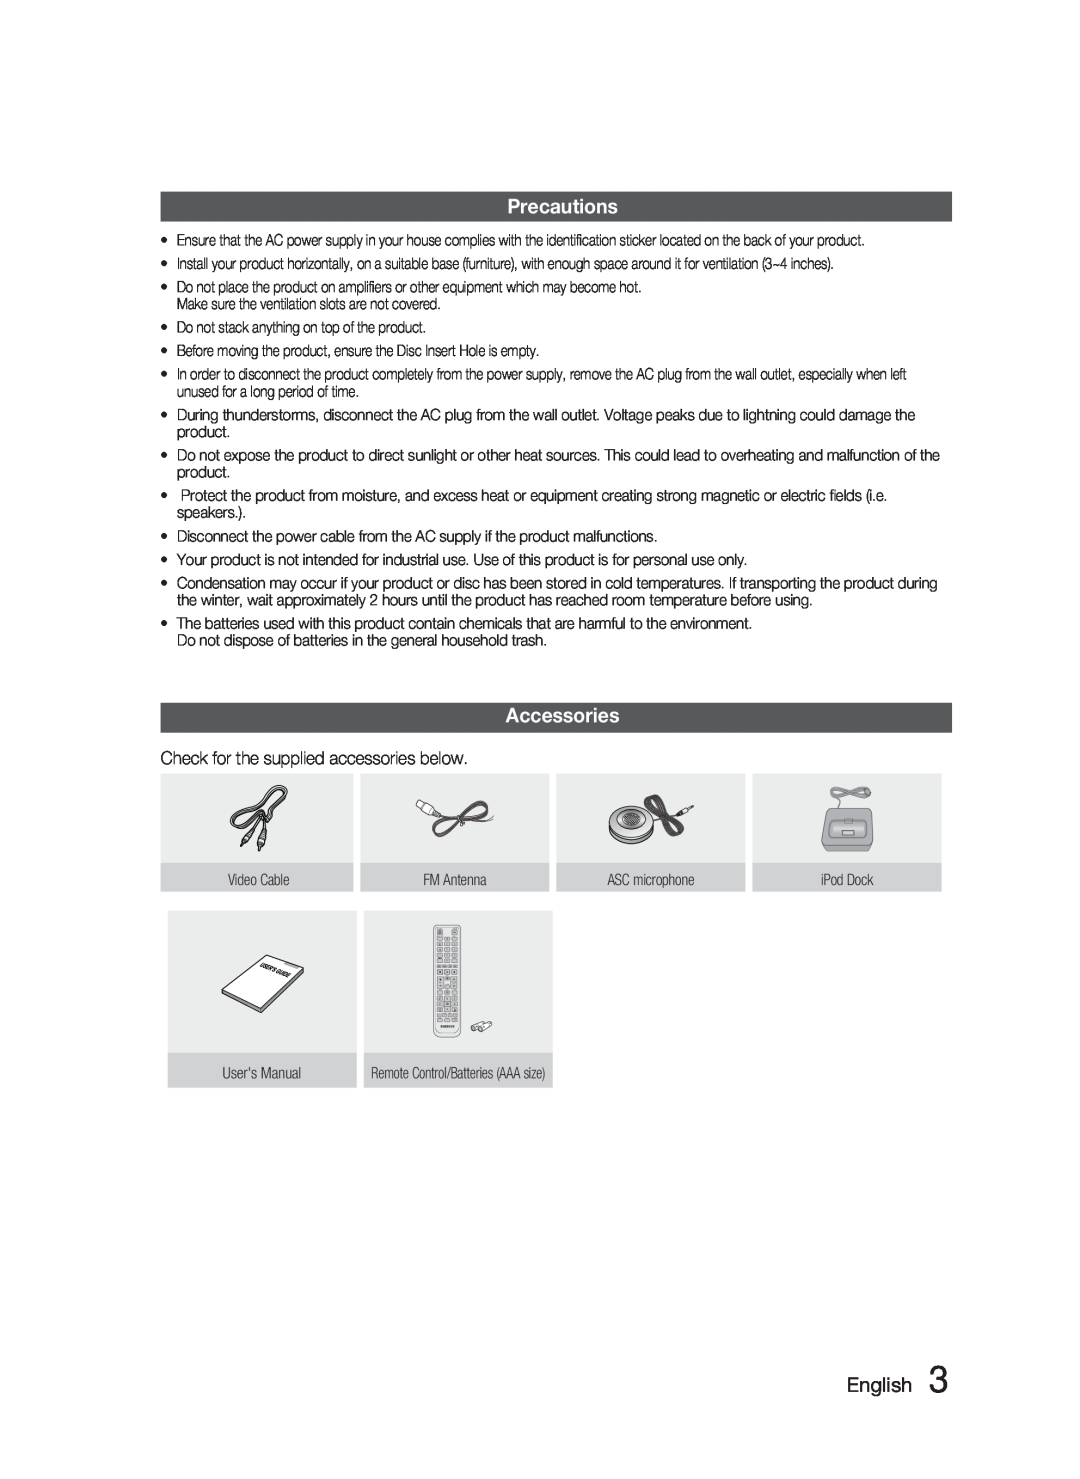 Samsung HT-C550-XAC user manual Precautions, Accessories, English 